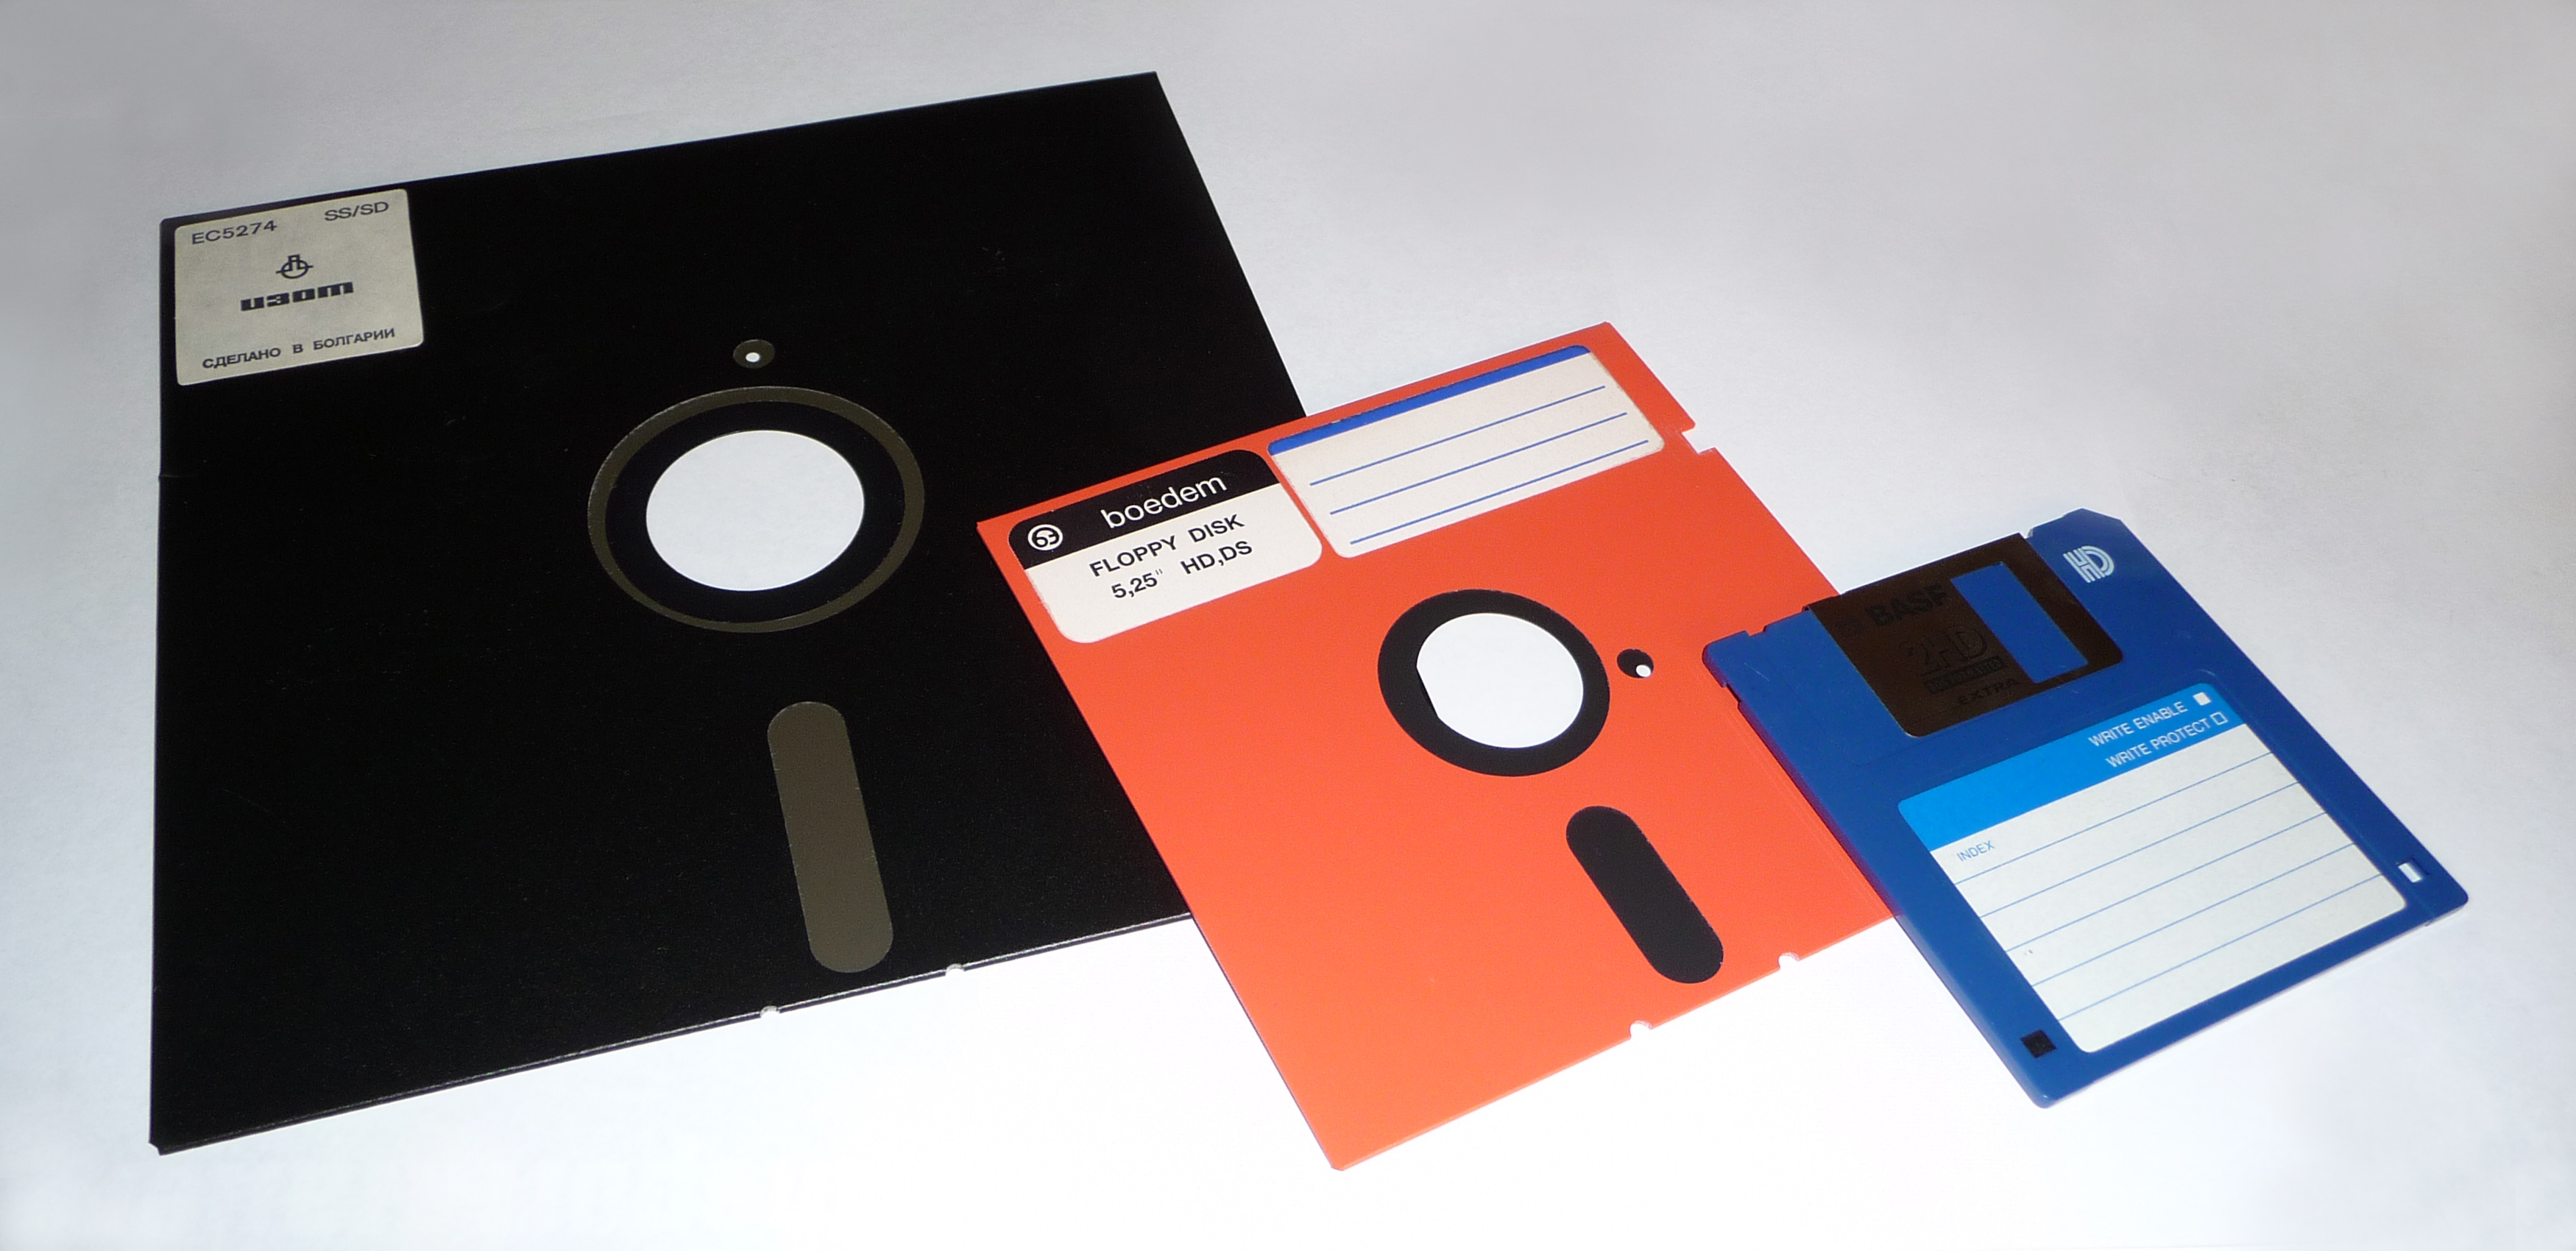 Copy Program From Floppy To Cd